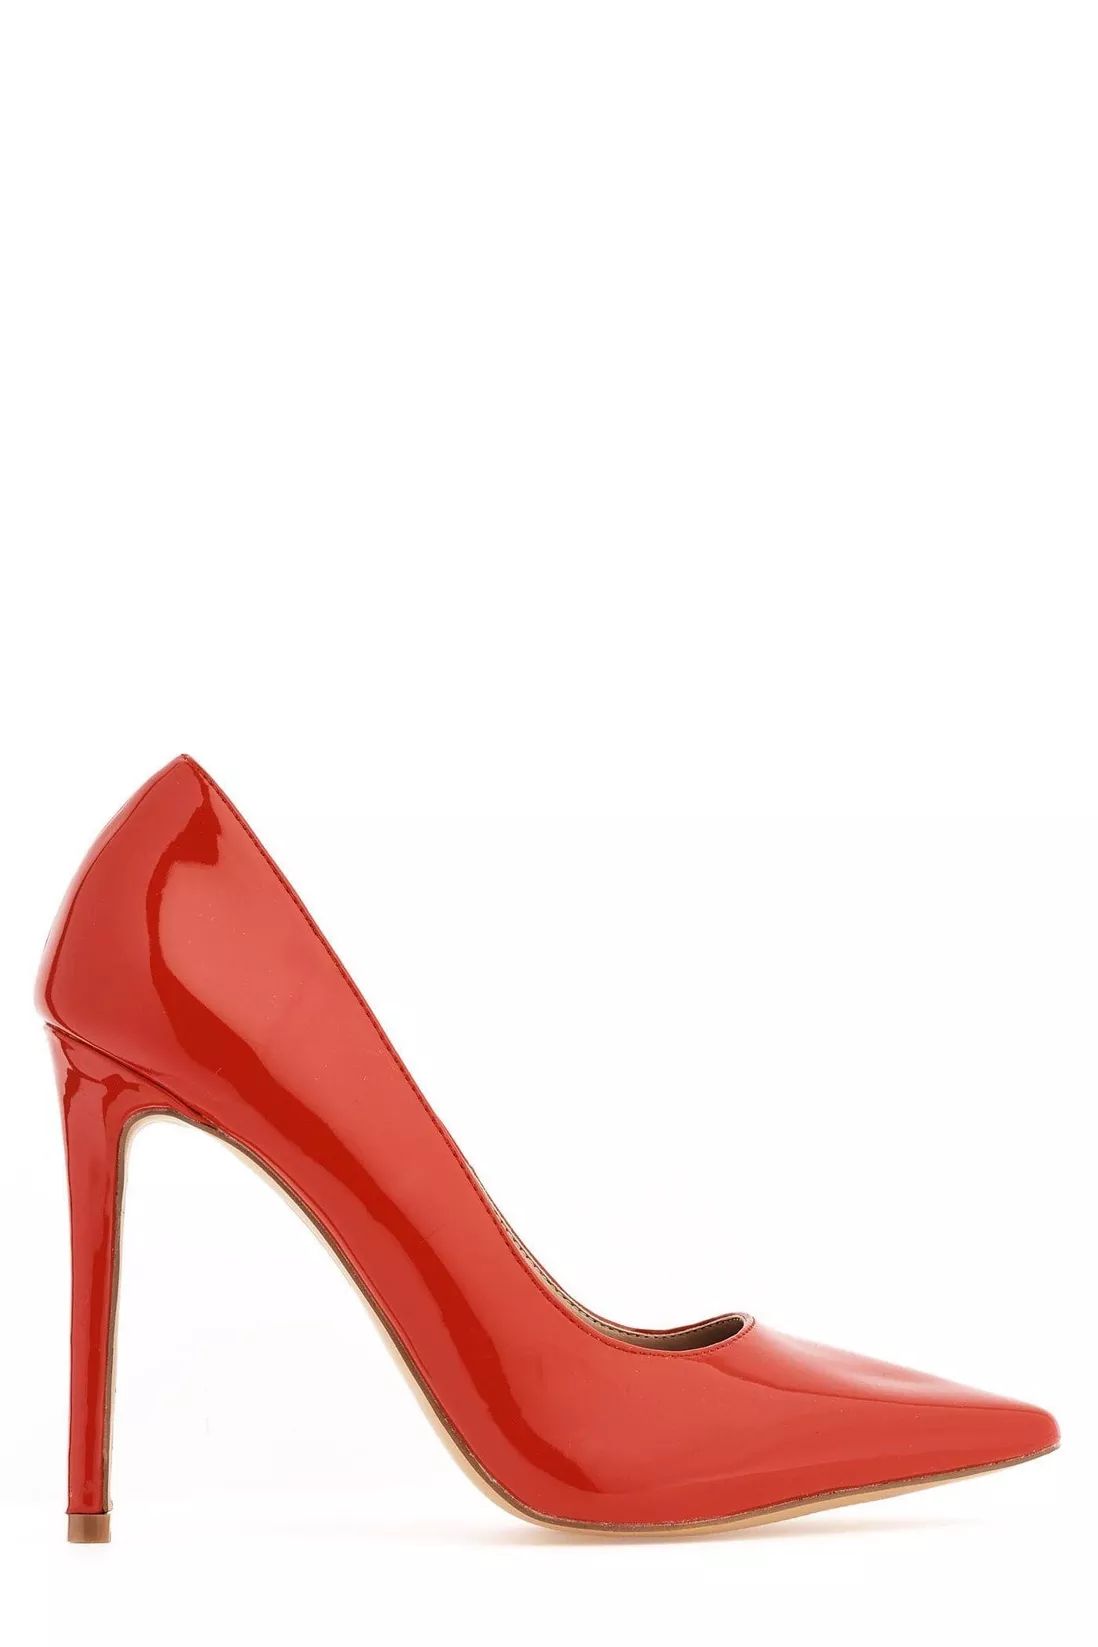 Heels | Mila High Stiletto Heel Patent PU Court Shoes | Miss Diva | Debenhams UK